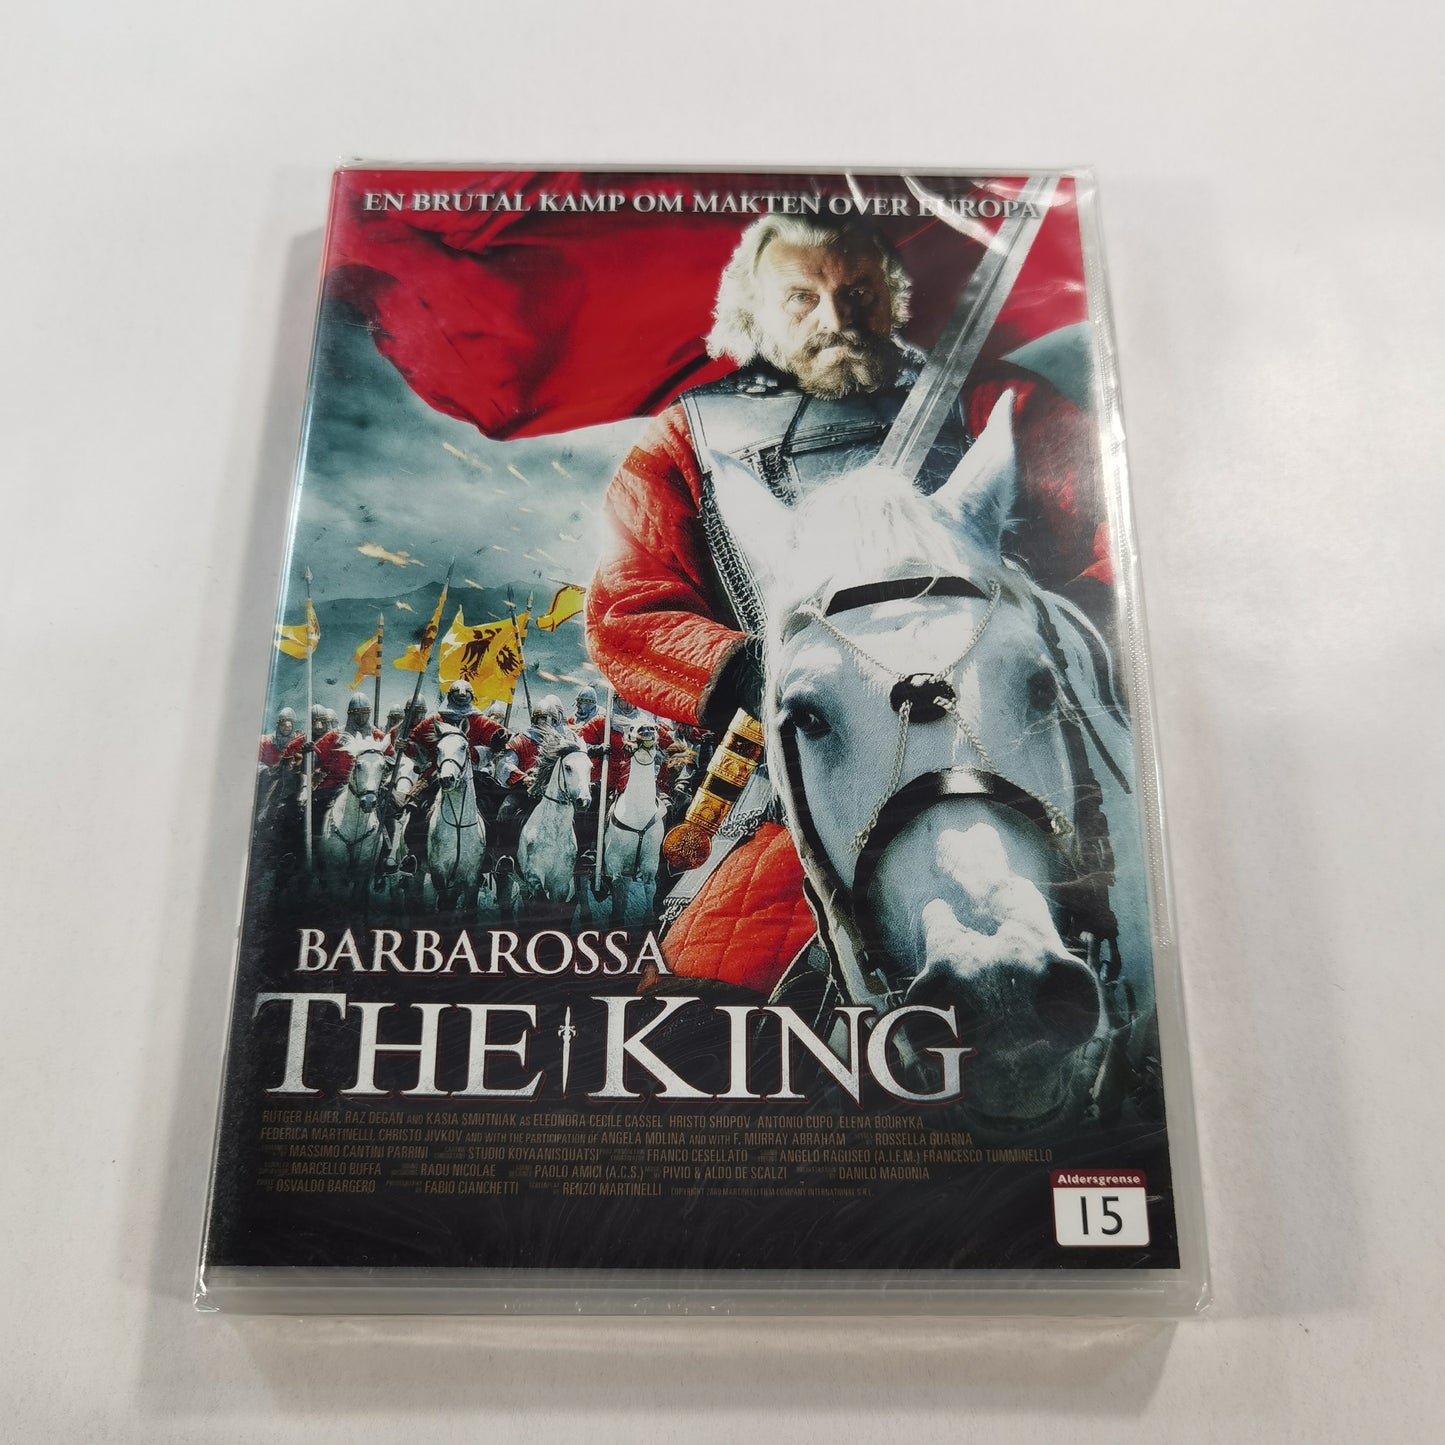 Barbarossa (2009) - DVD NO 2010 NEW!